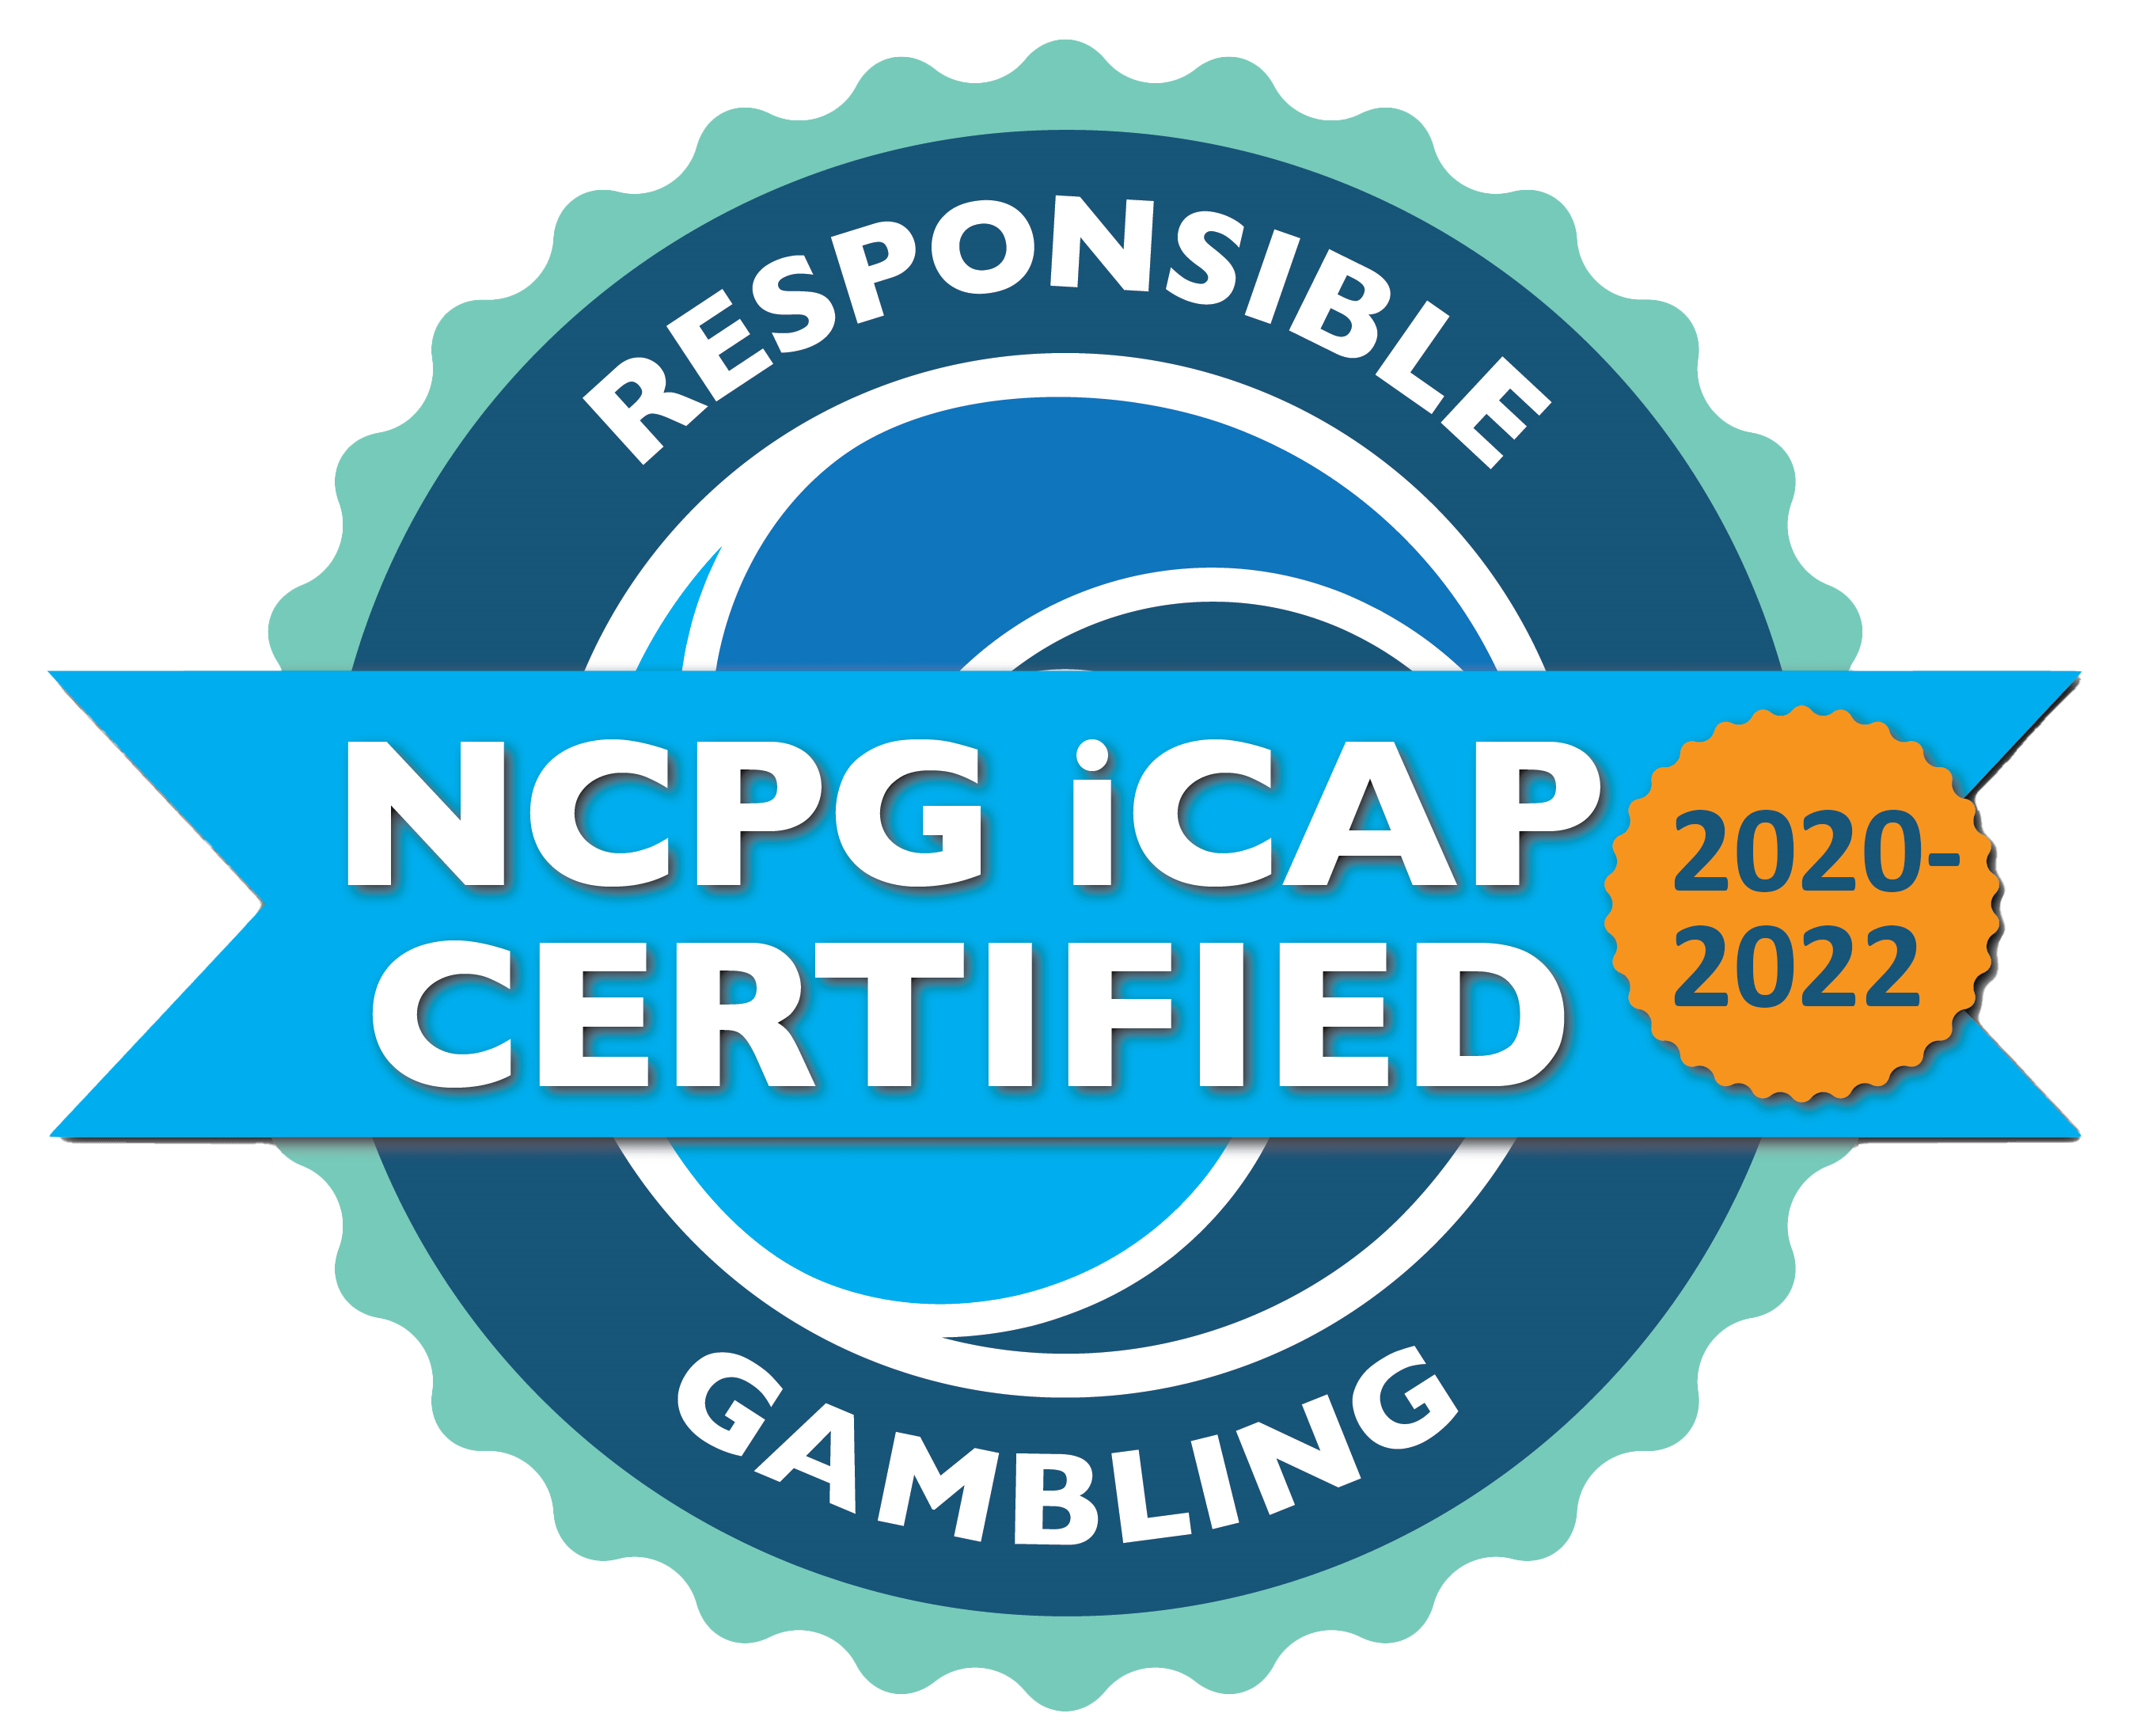 Responsible Gambling NCPG iCAP Certified 2020-2022